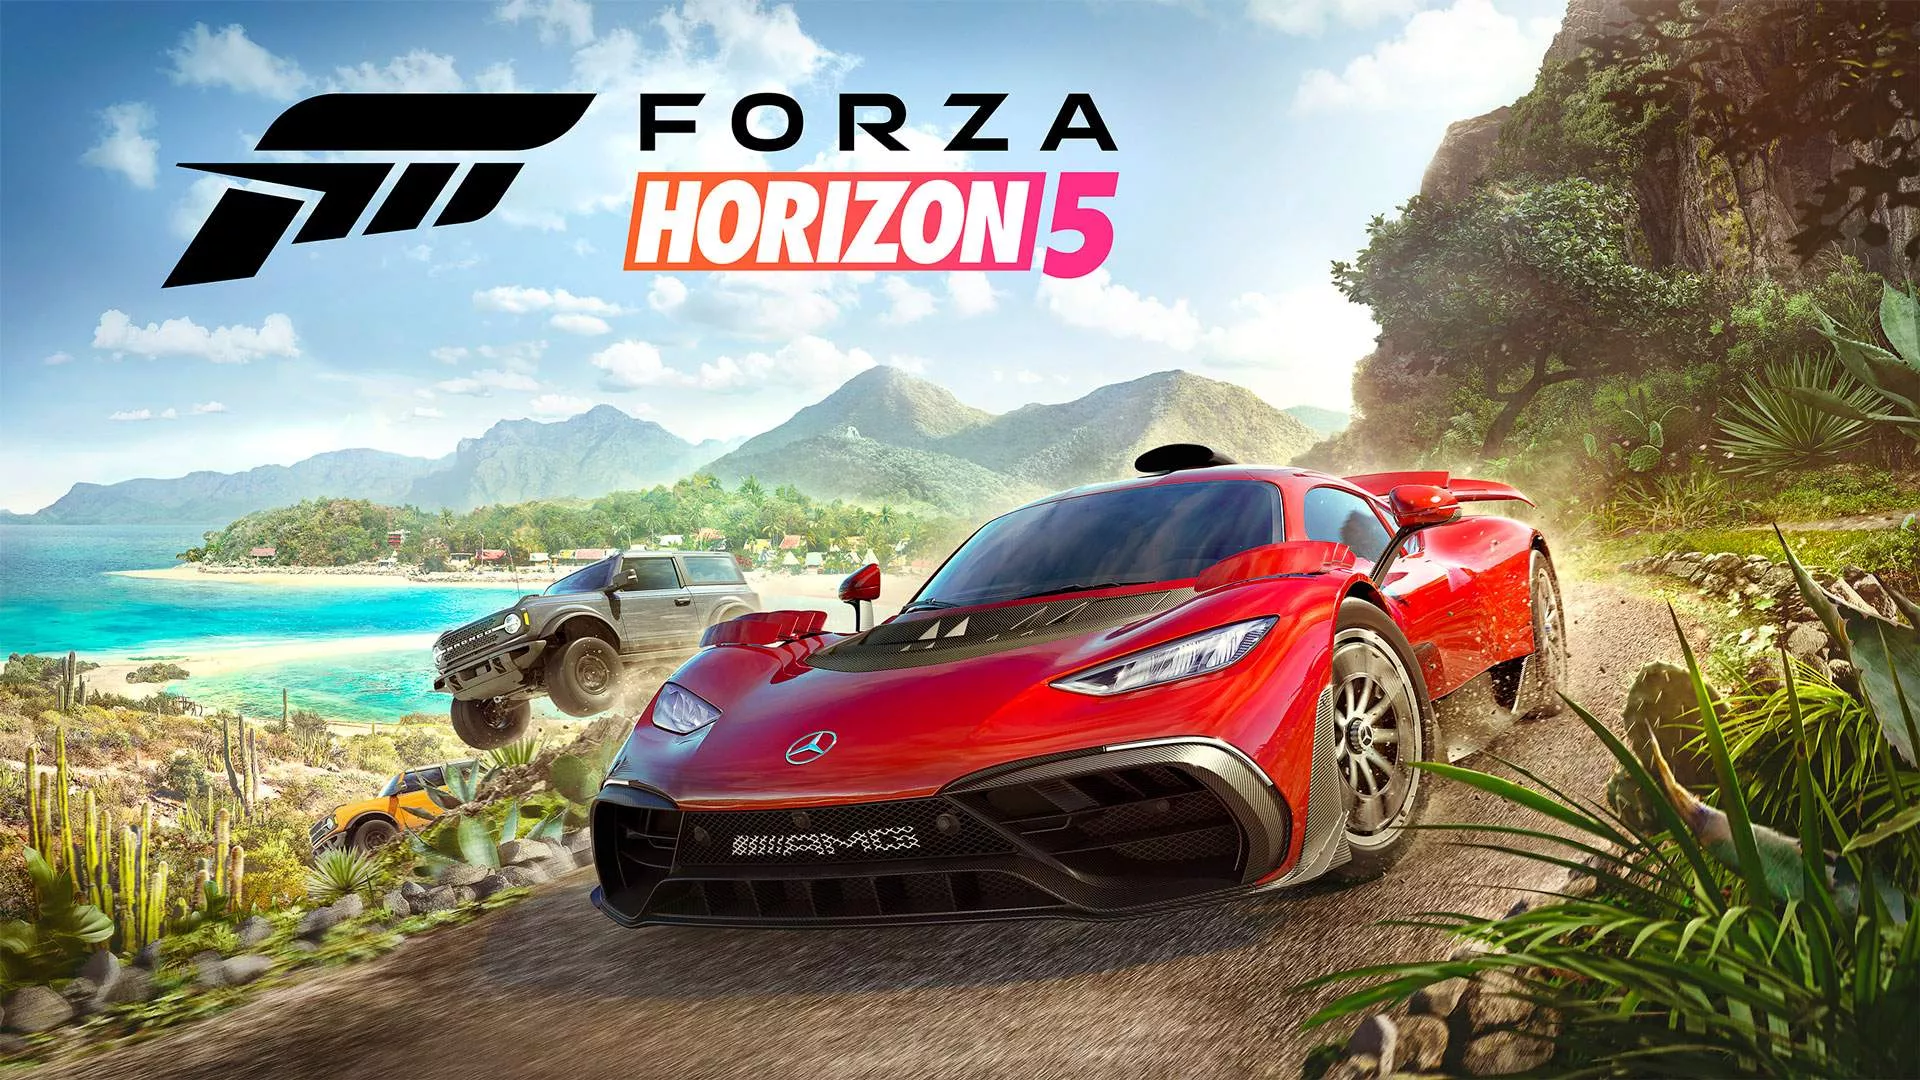 Forza Horizon 5: Viel Gameplay, Cover und Controller Heropic